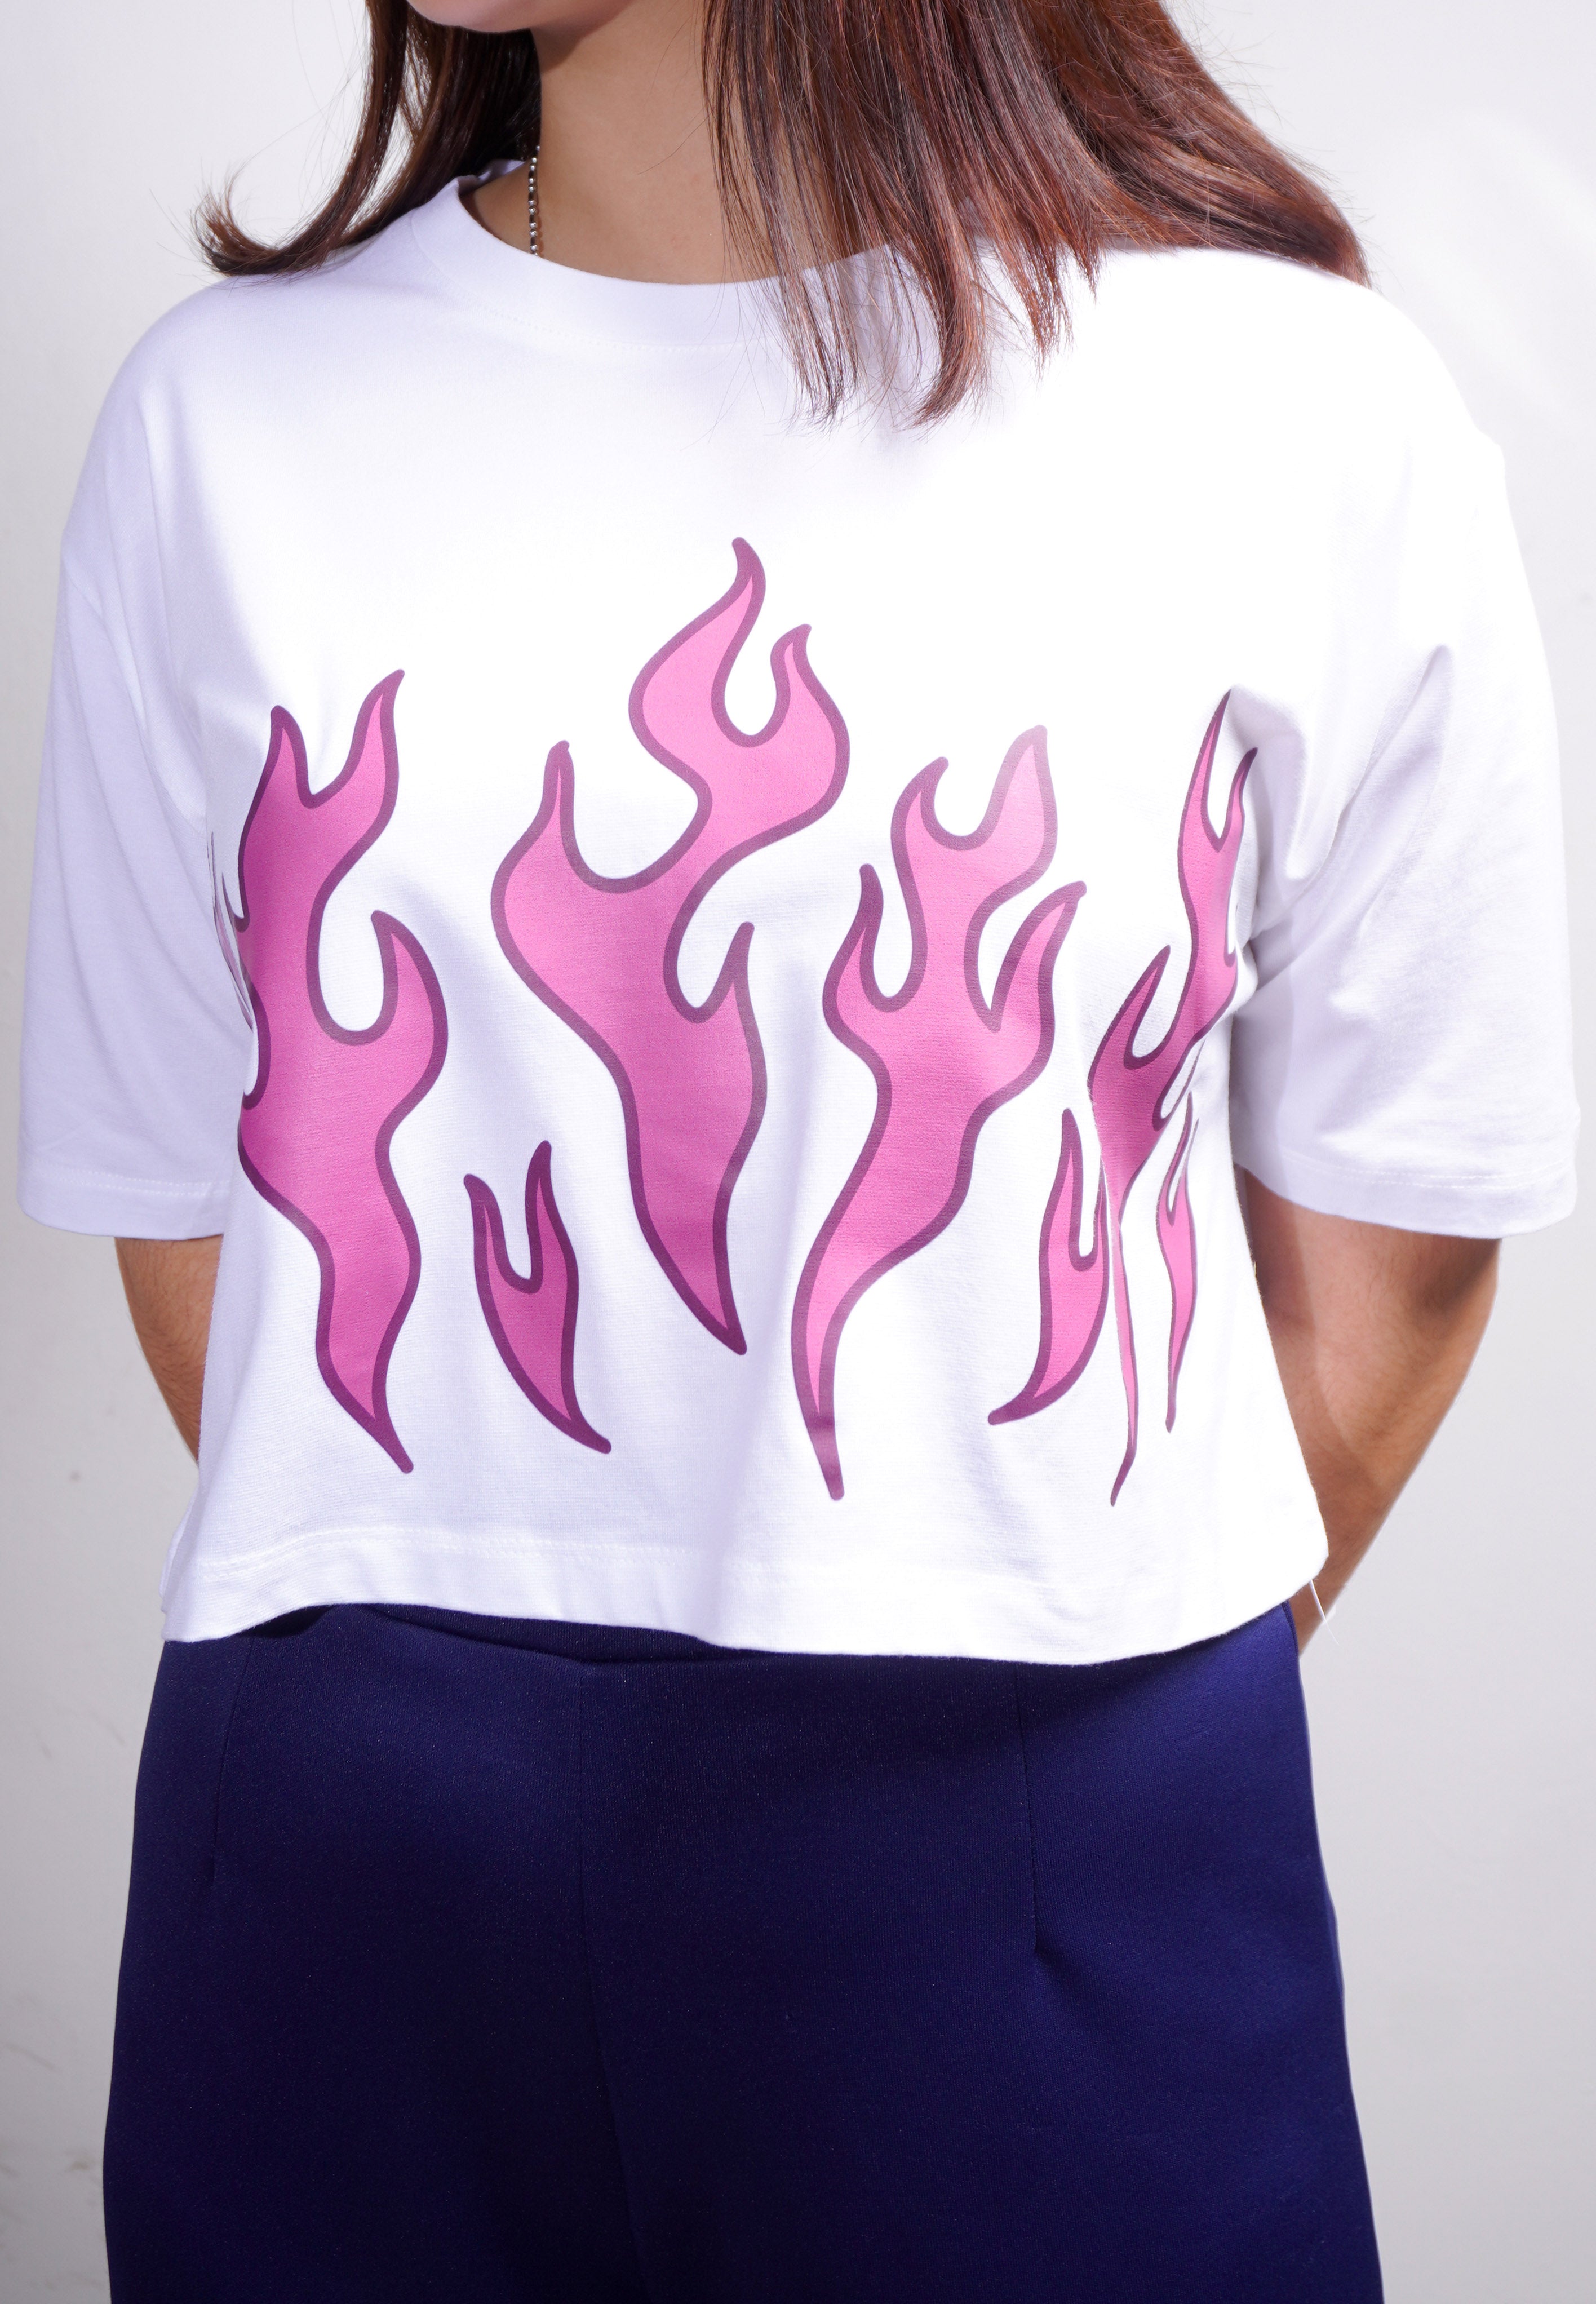 TDLA LTE48 crop top OLC kaos oversize wanita pink fire putih